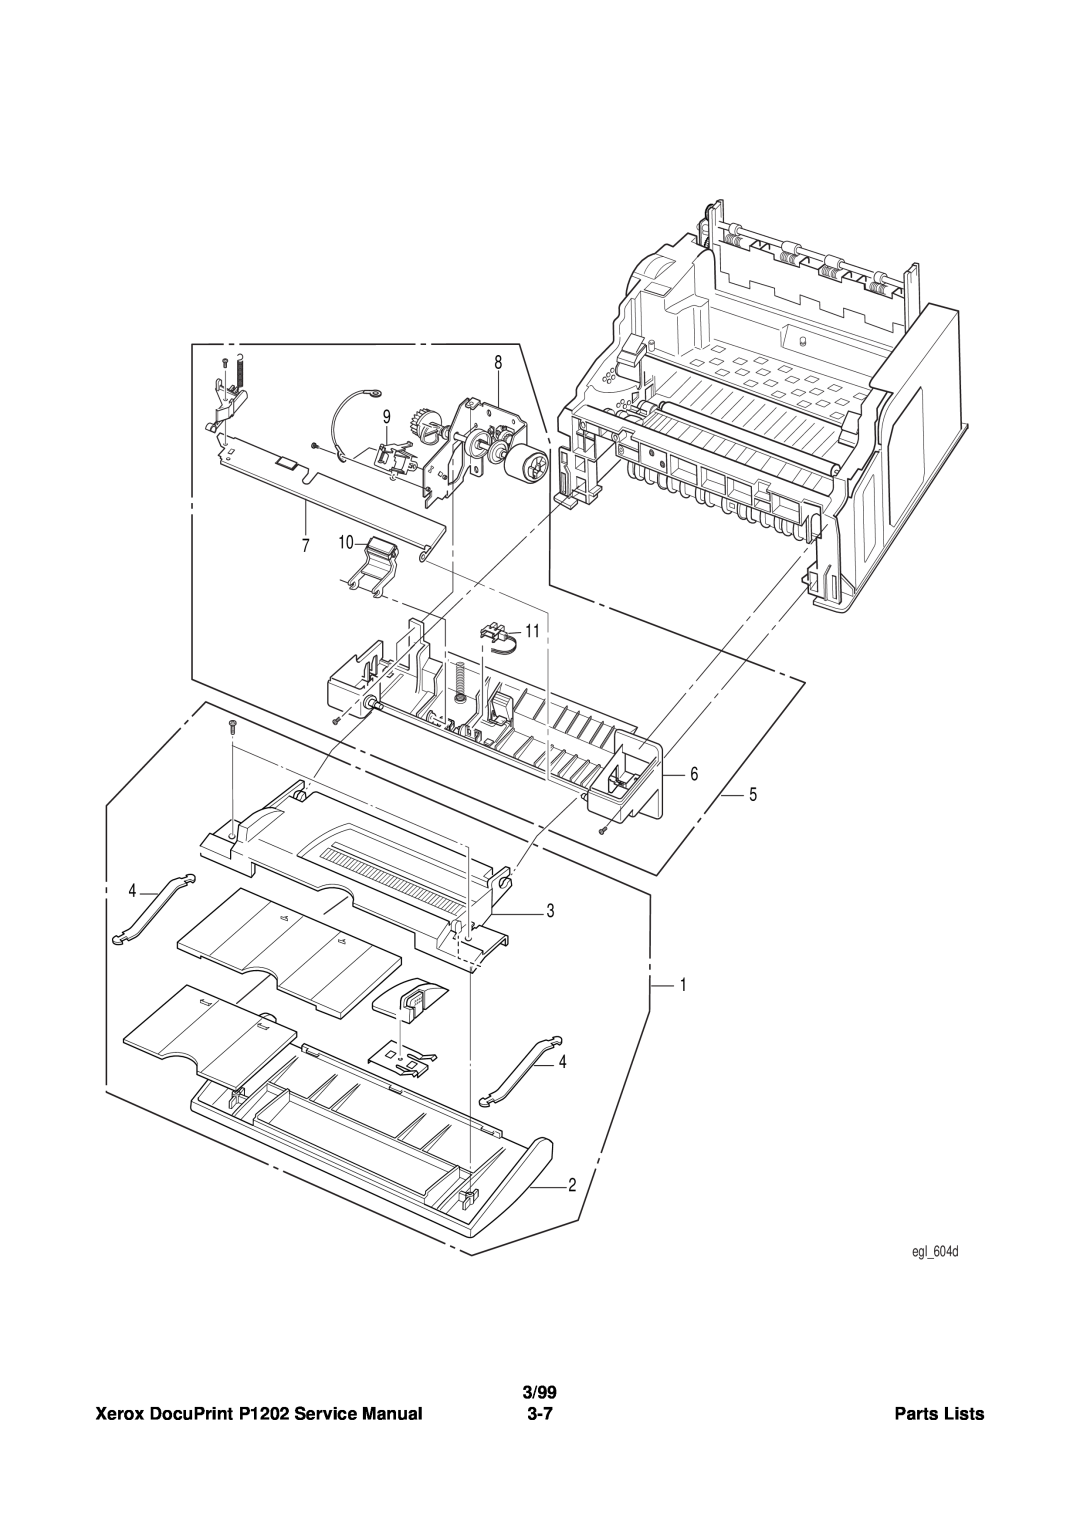 Xerox service manual 3/99, Xerox DocuPrint P1202 Service Manual, Parts Lists, egl604d 